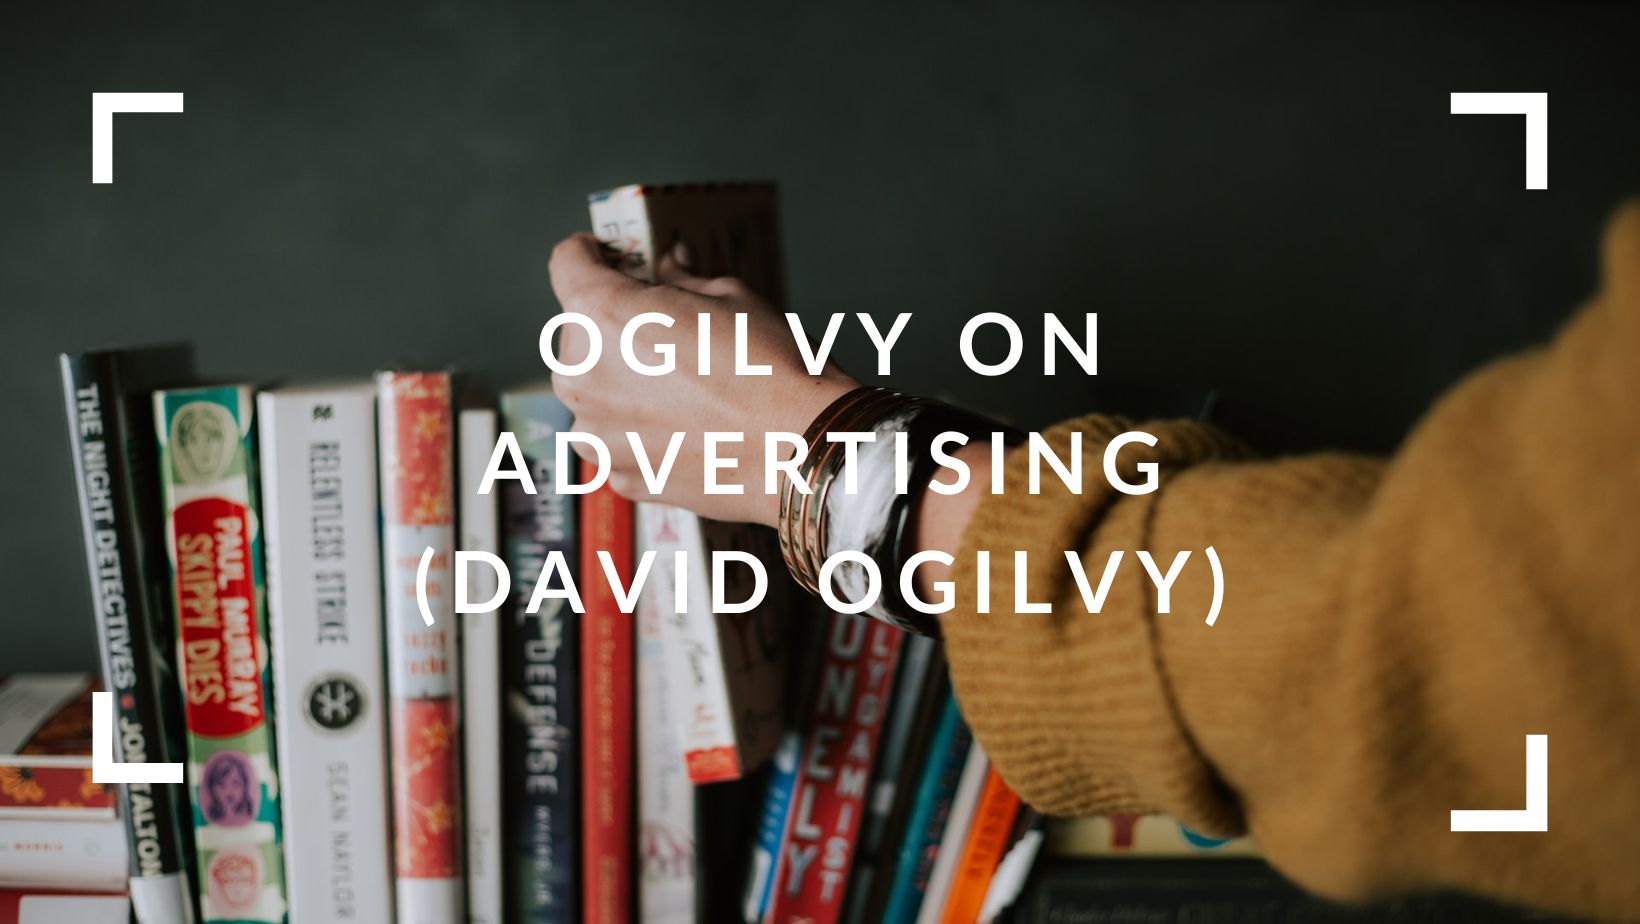 Ogilvy on Advertising (David Ogilvy)